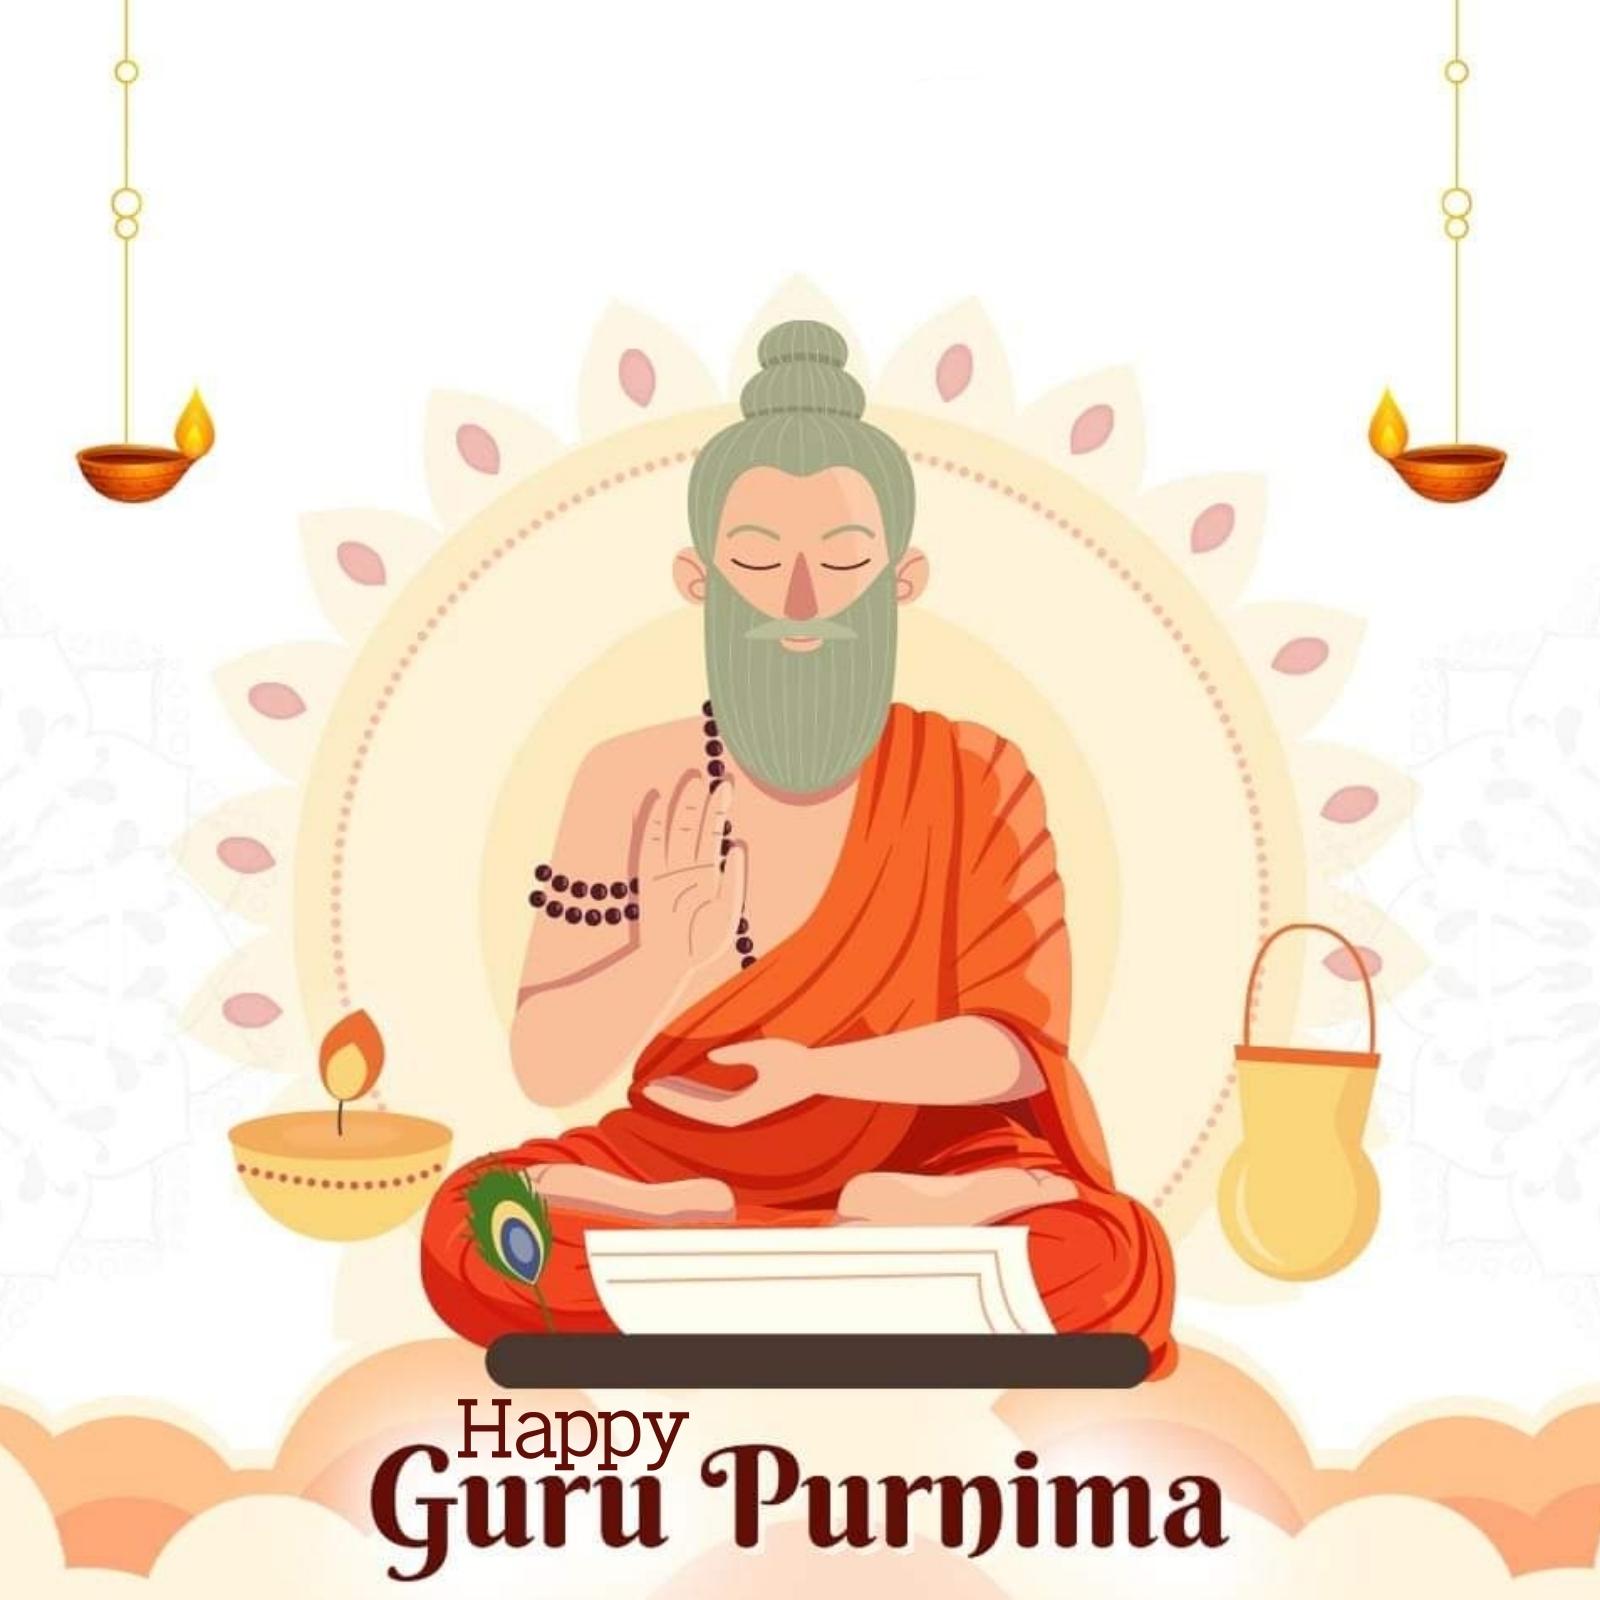 Happy Guru Purnima Images for Whatsapp and Facebook